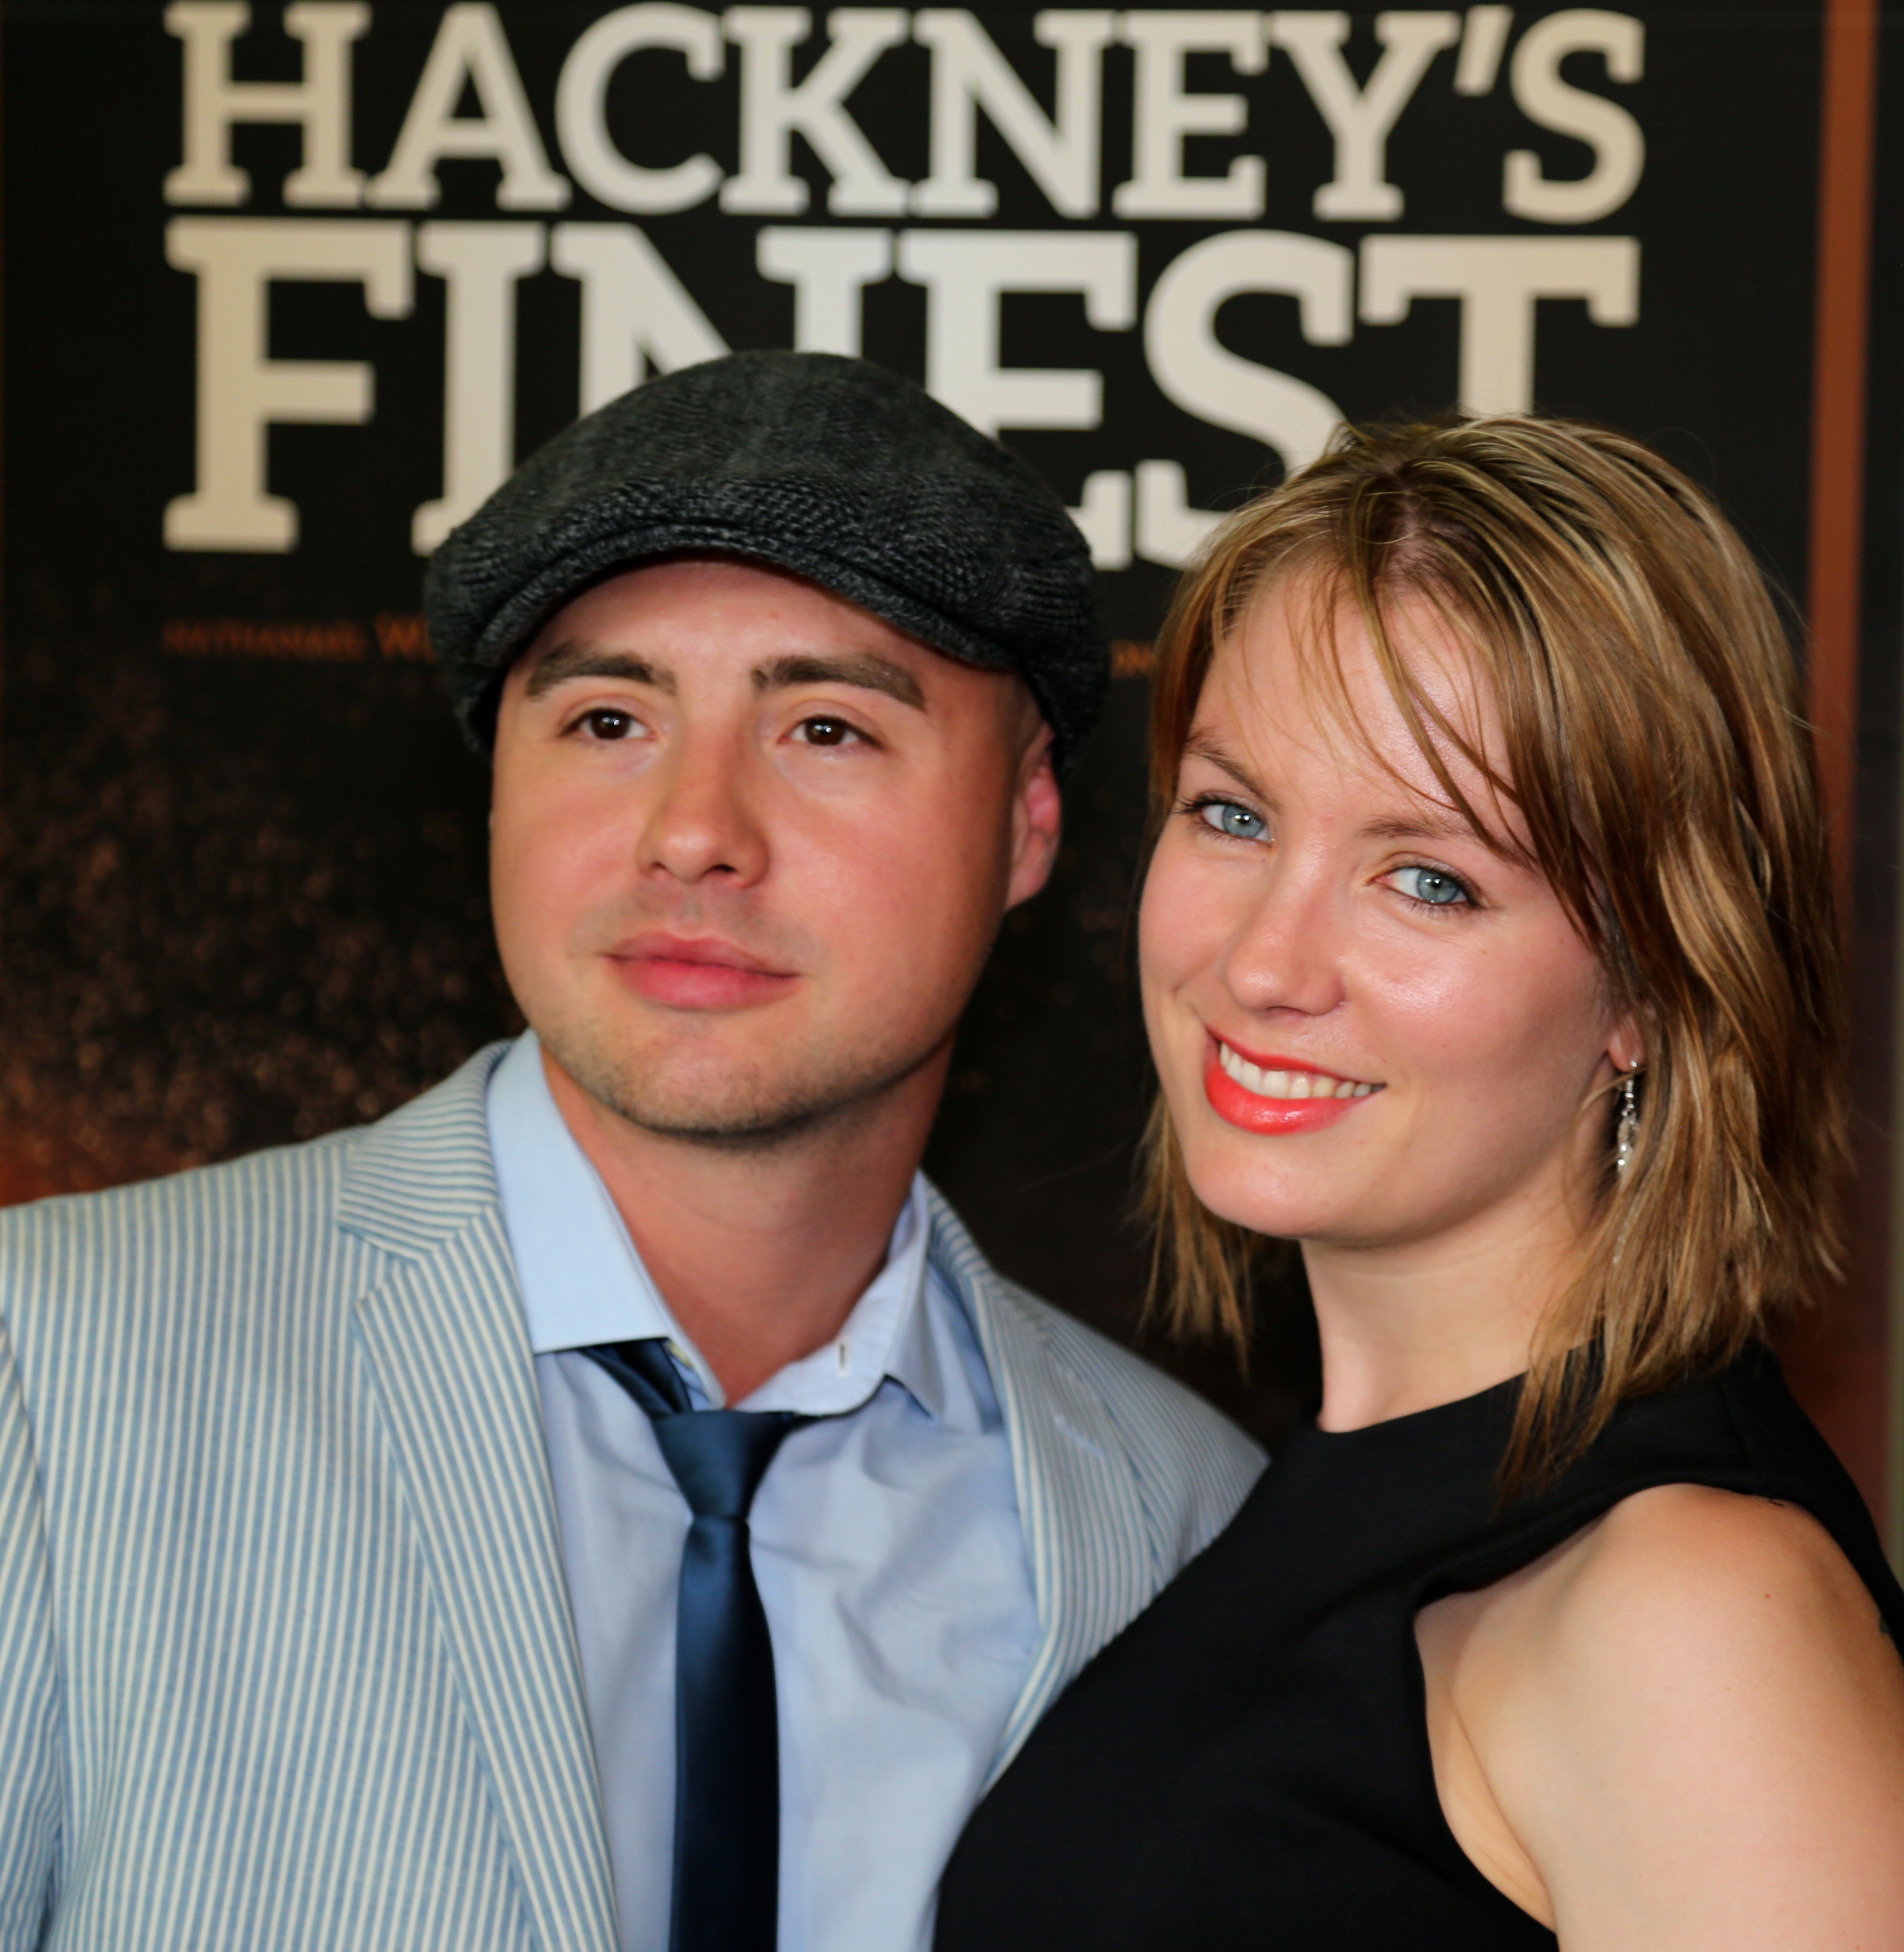 Nate Wiseman and Kat Gellin at the Hackney's Finest premier summer 2014